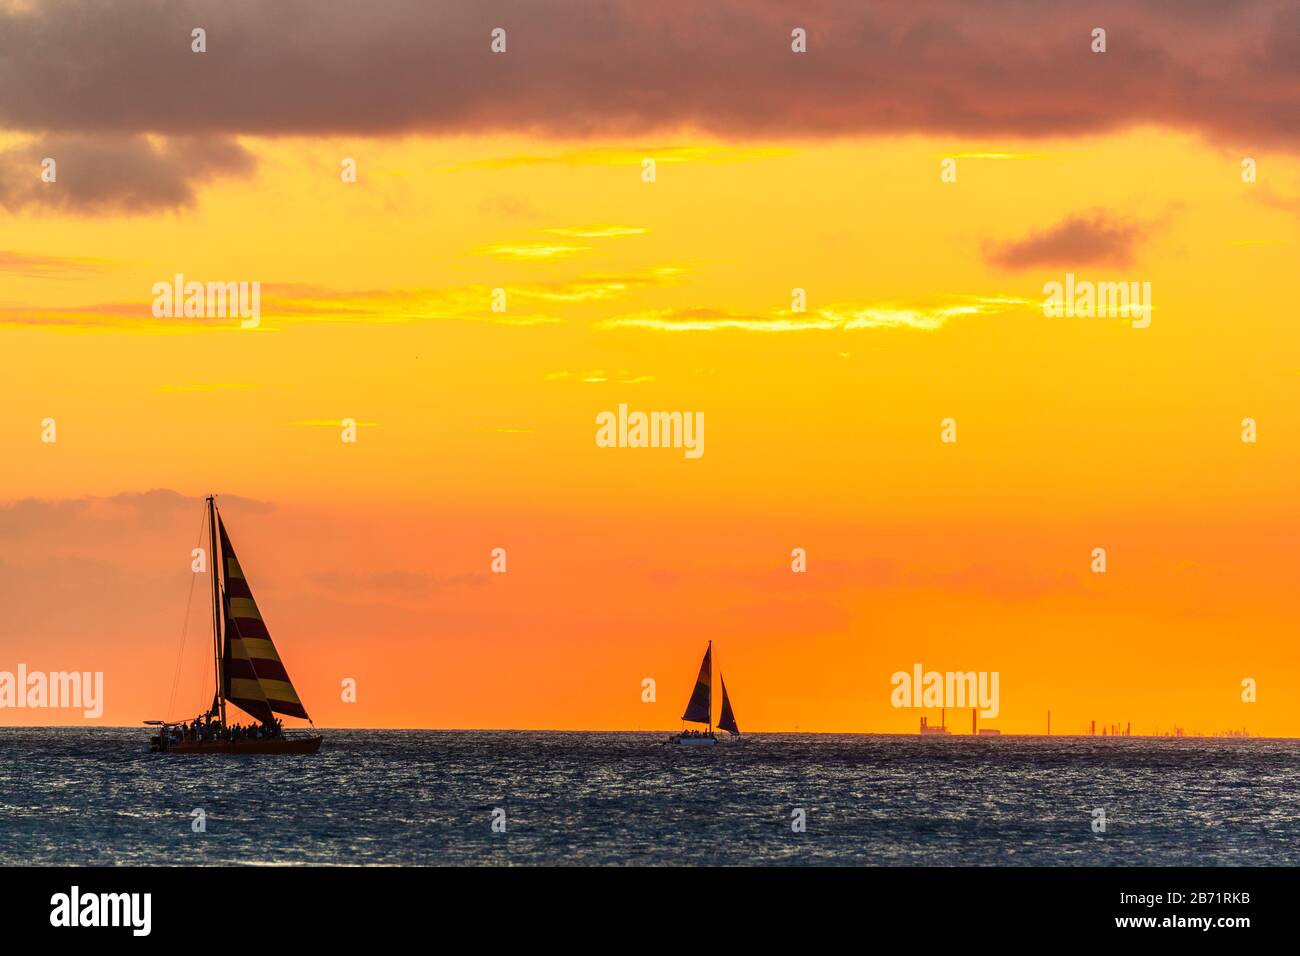 United States of America, Hawaii, Oahu island, sailing boat at sunset Stock Photo